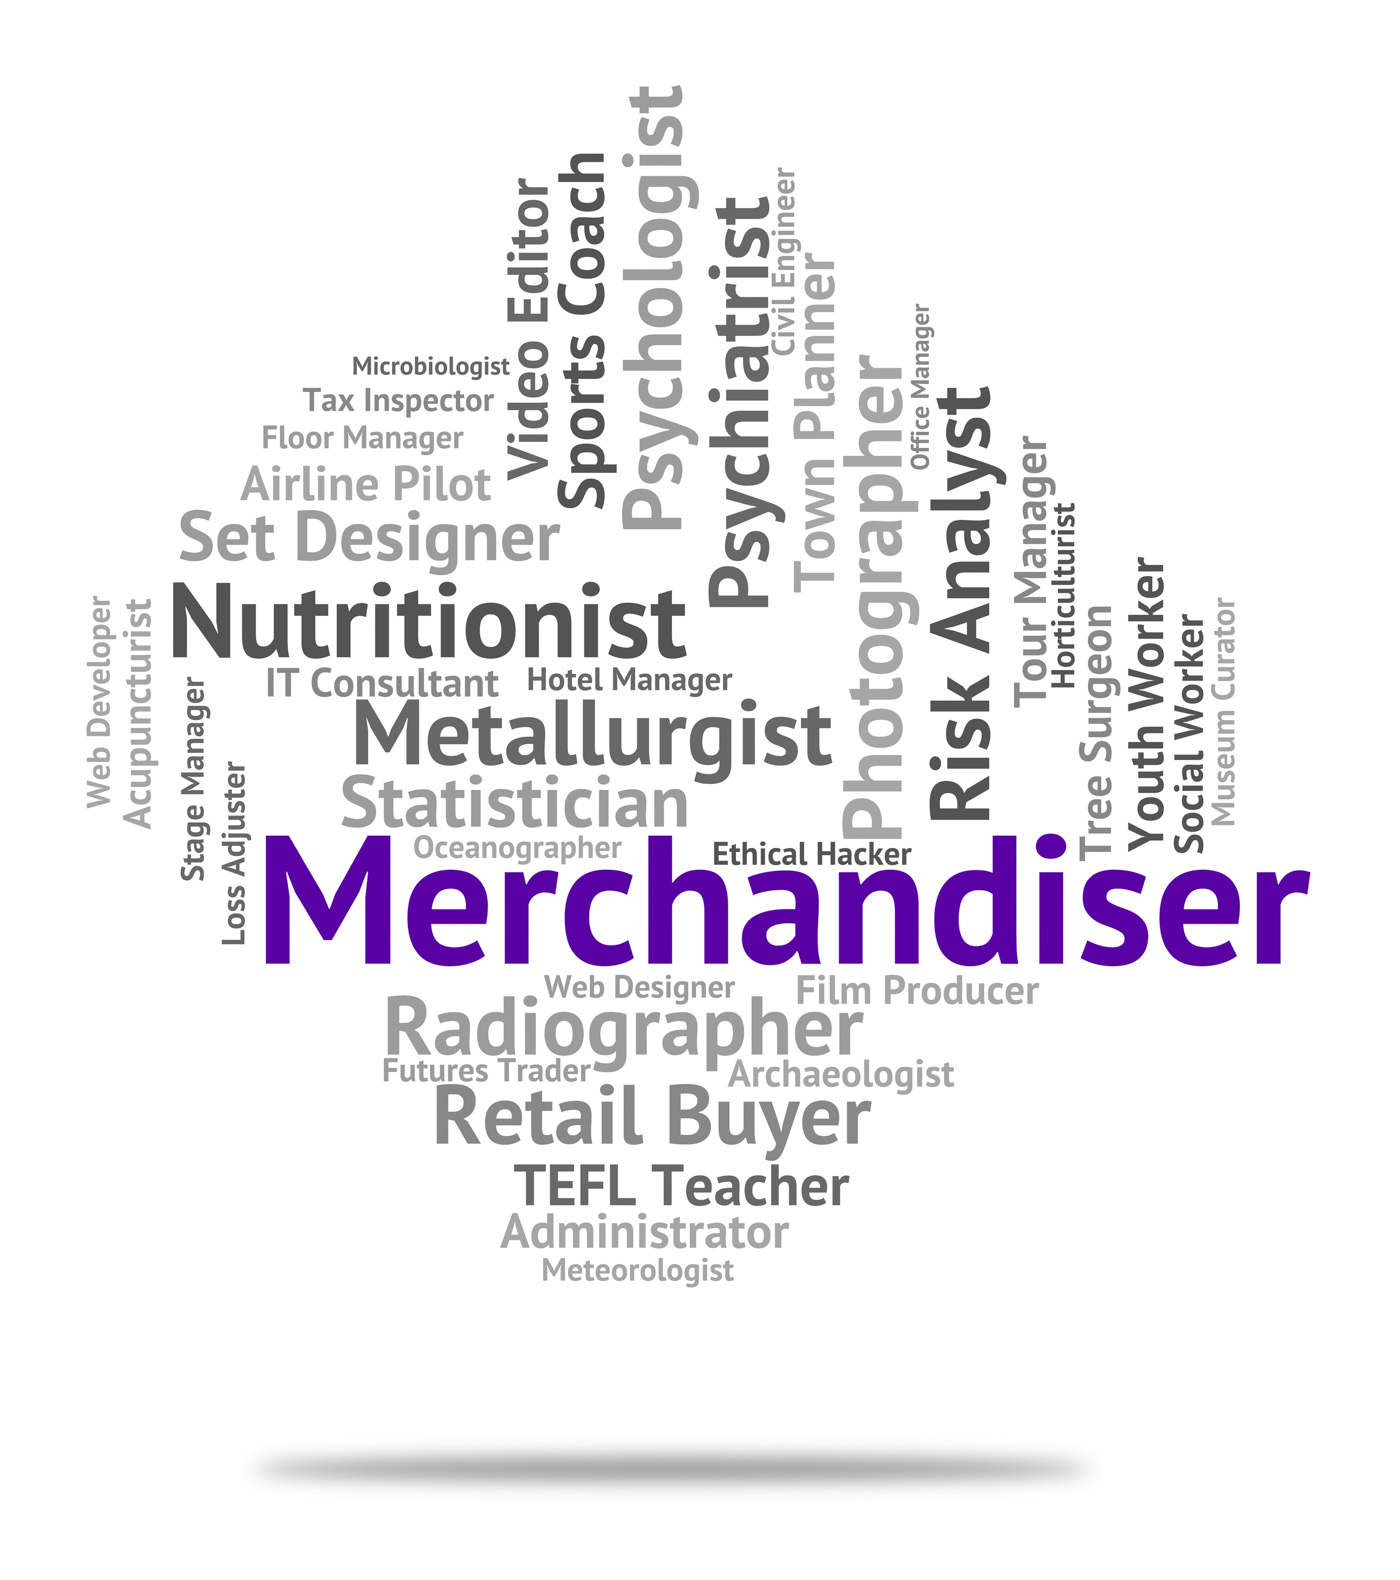 Merchandiser job shows hire words and work photo